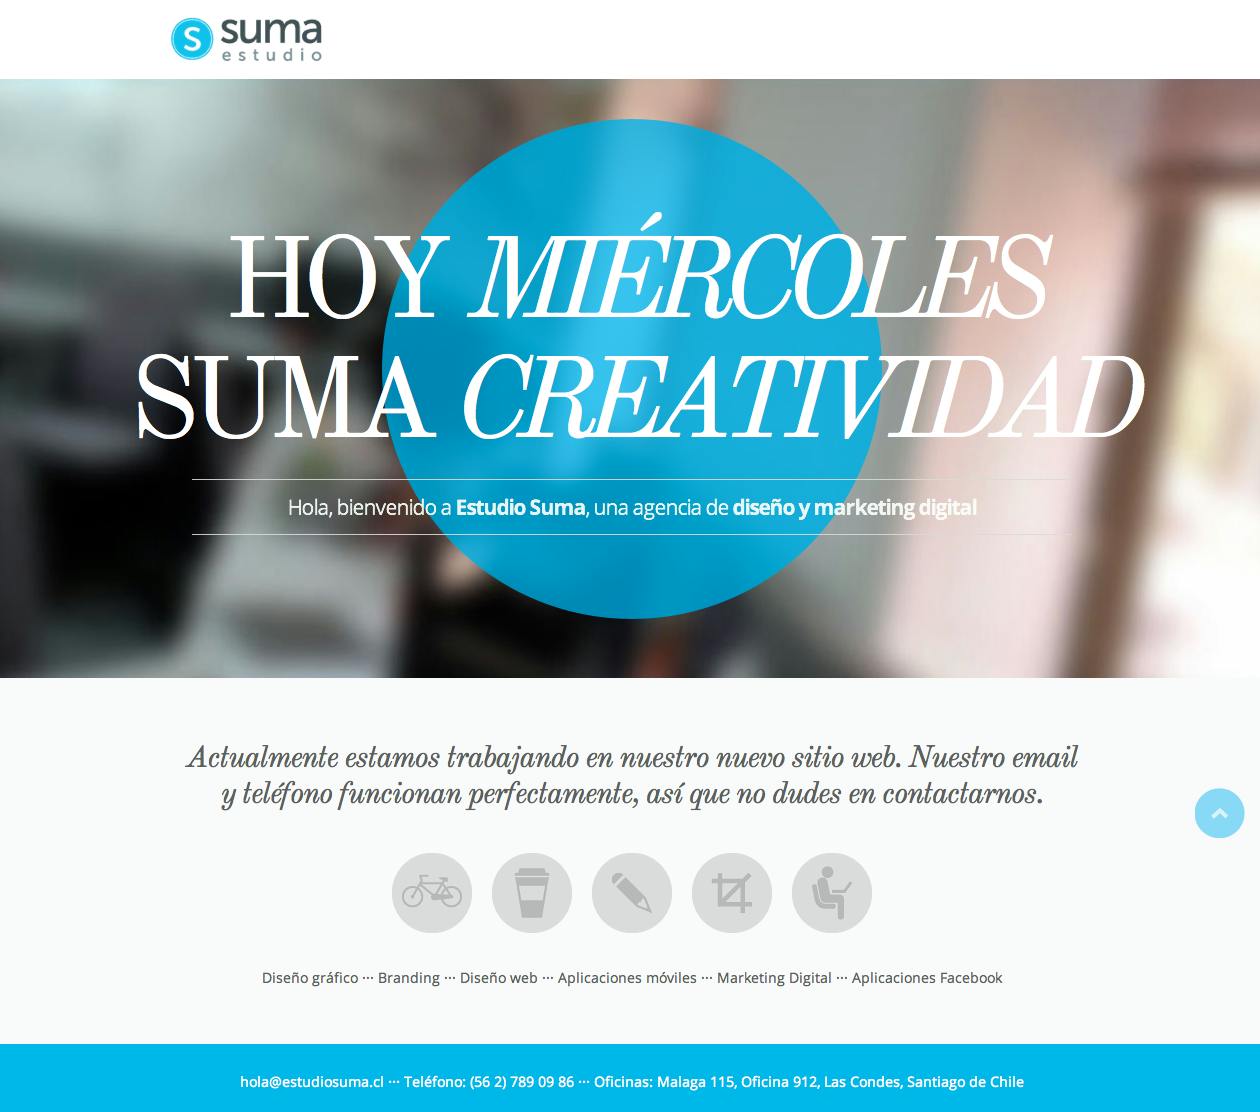 Suma Website Screenshot